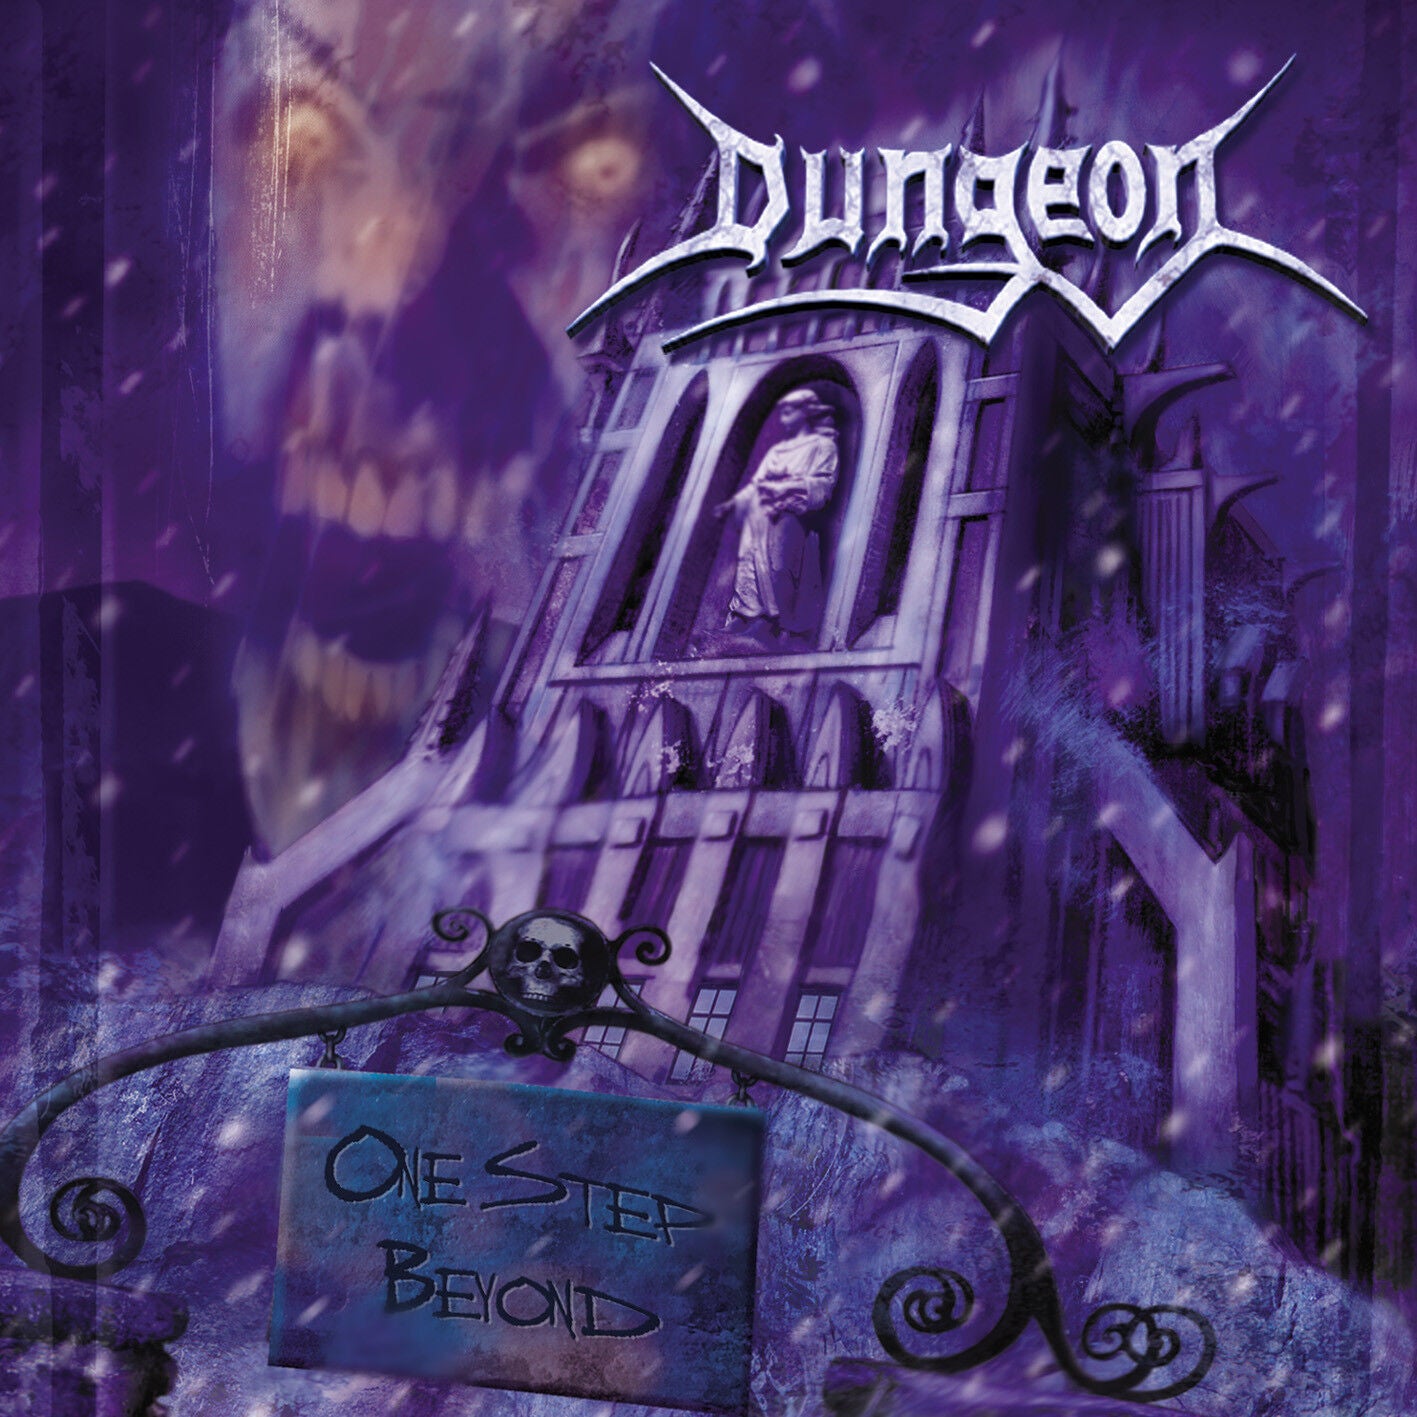 DUNGEON - One Step Beyond Ltd. CD / DVD + Bonus Tracks 2005 Power Metal LORD